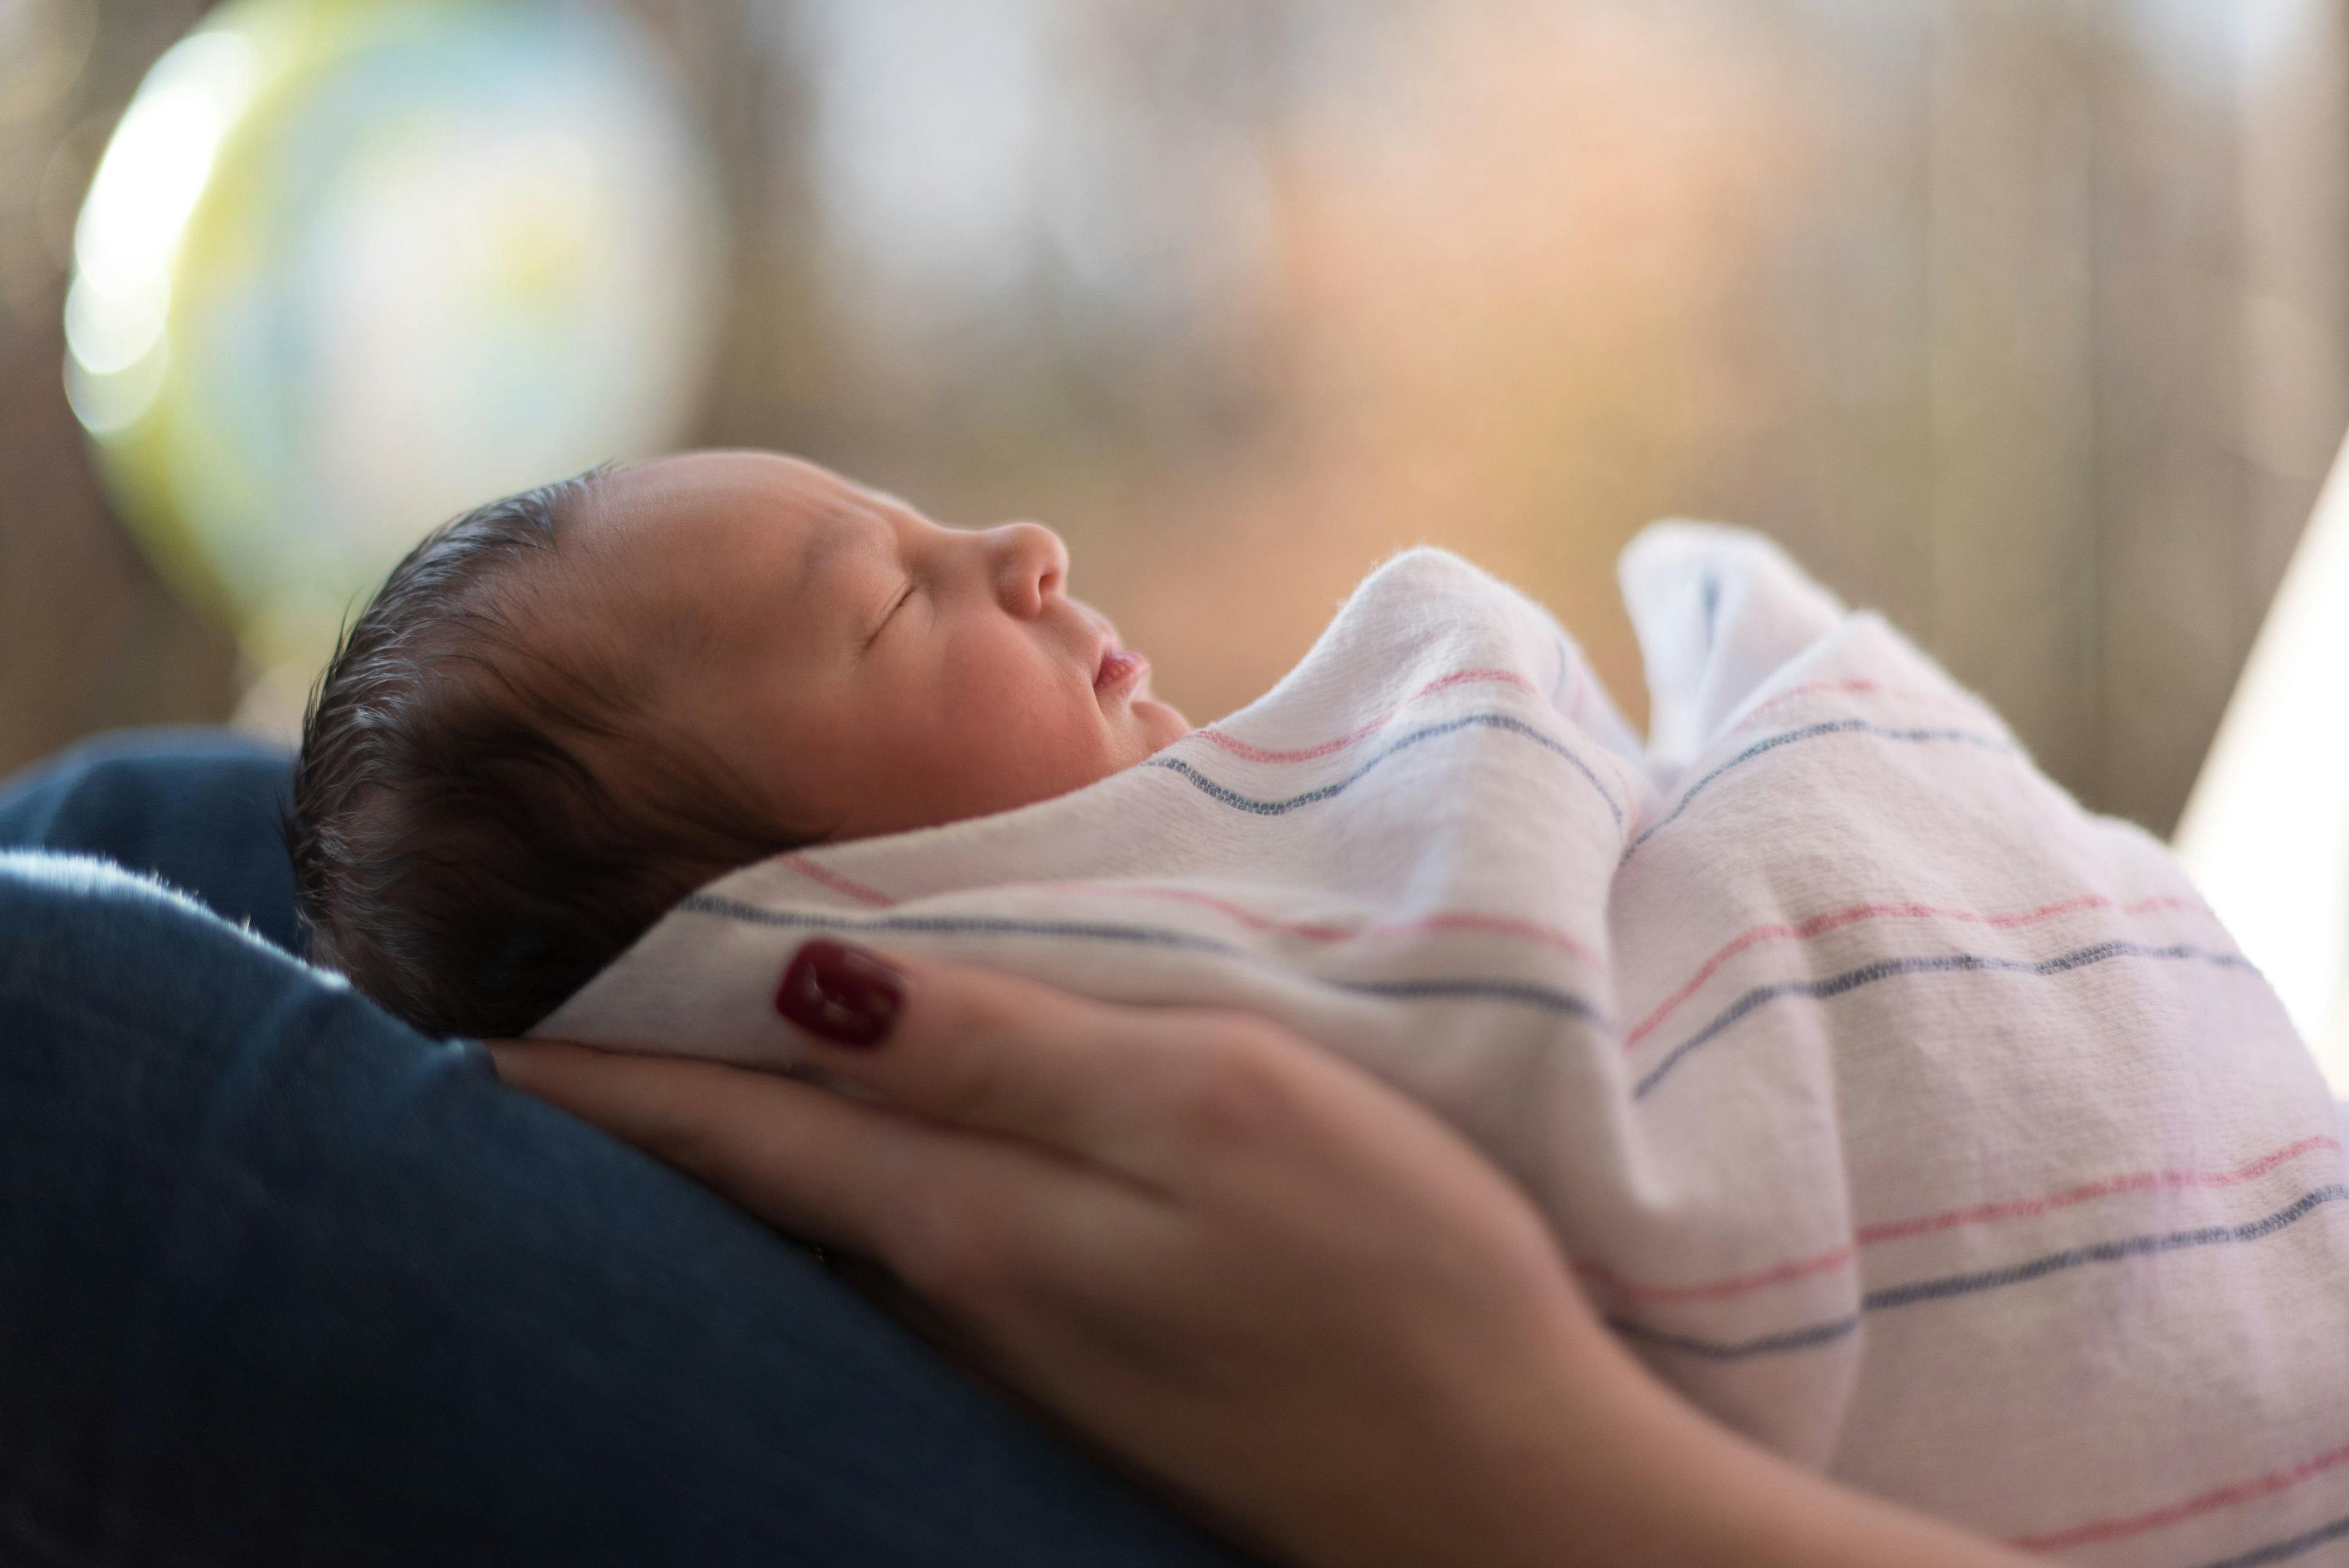 Strategies to modernize newborn screening